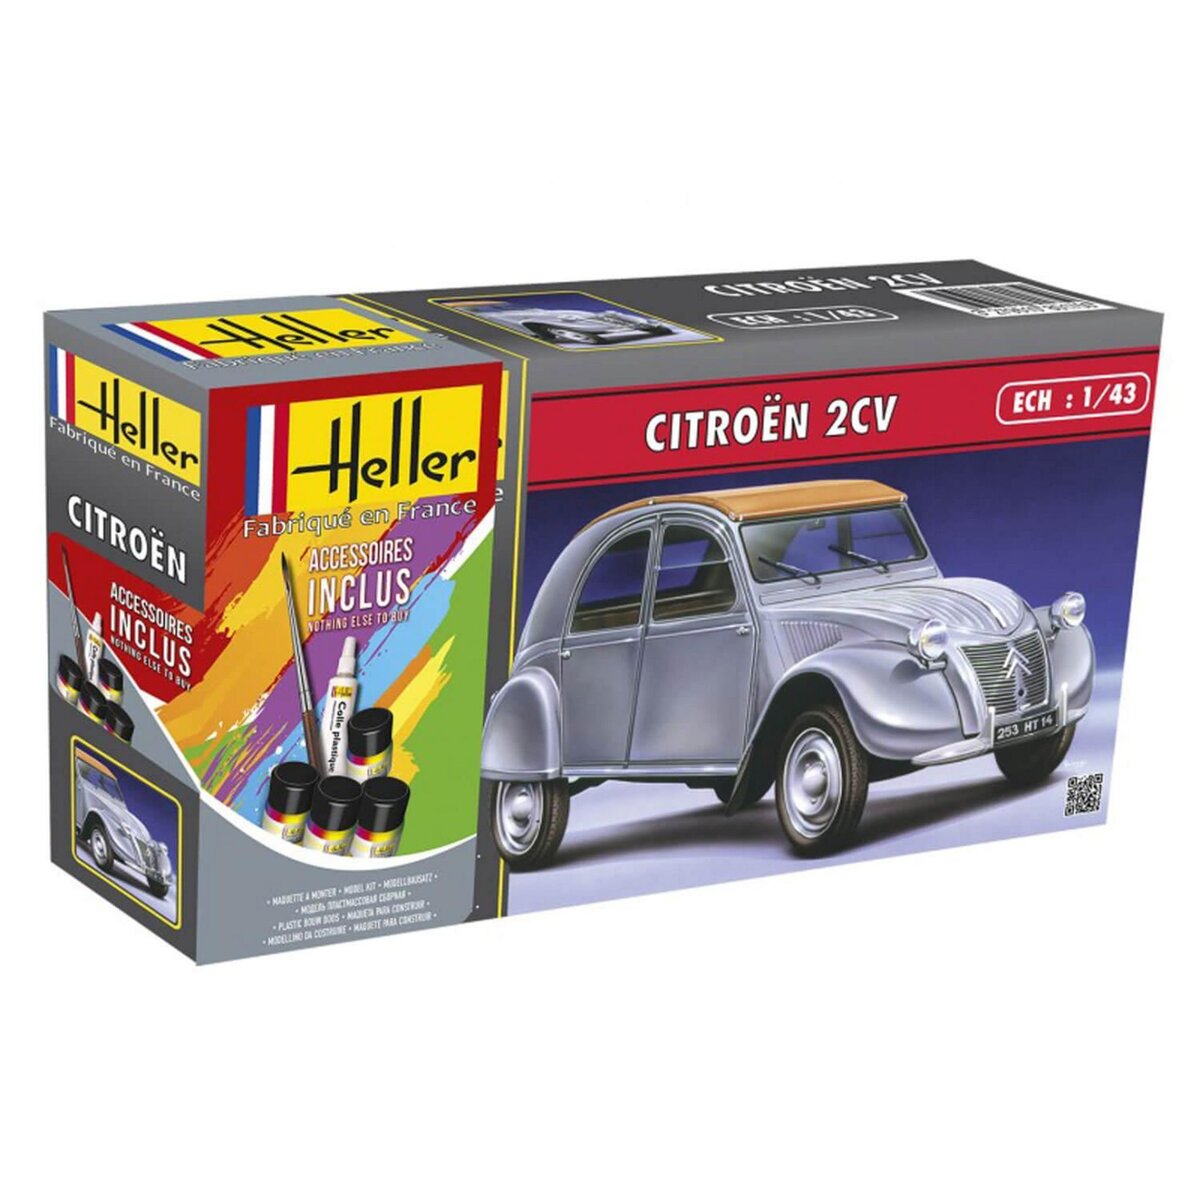 Maquette voiture : Citroën 2CV Charleston HELLER Pas Cher 